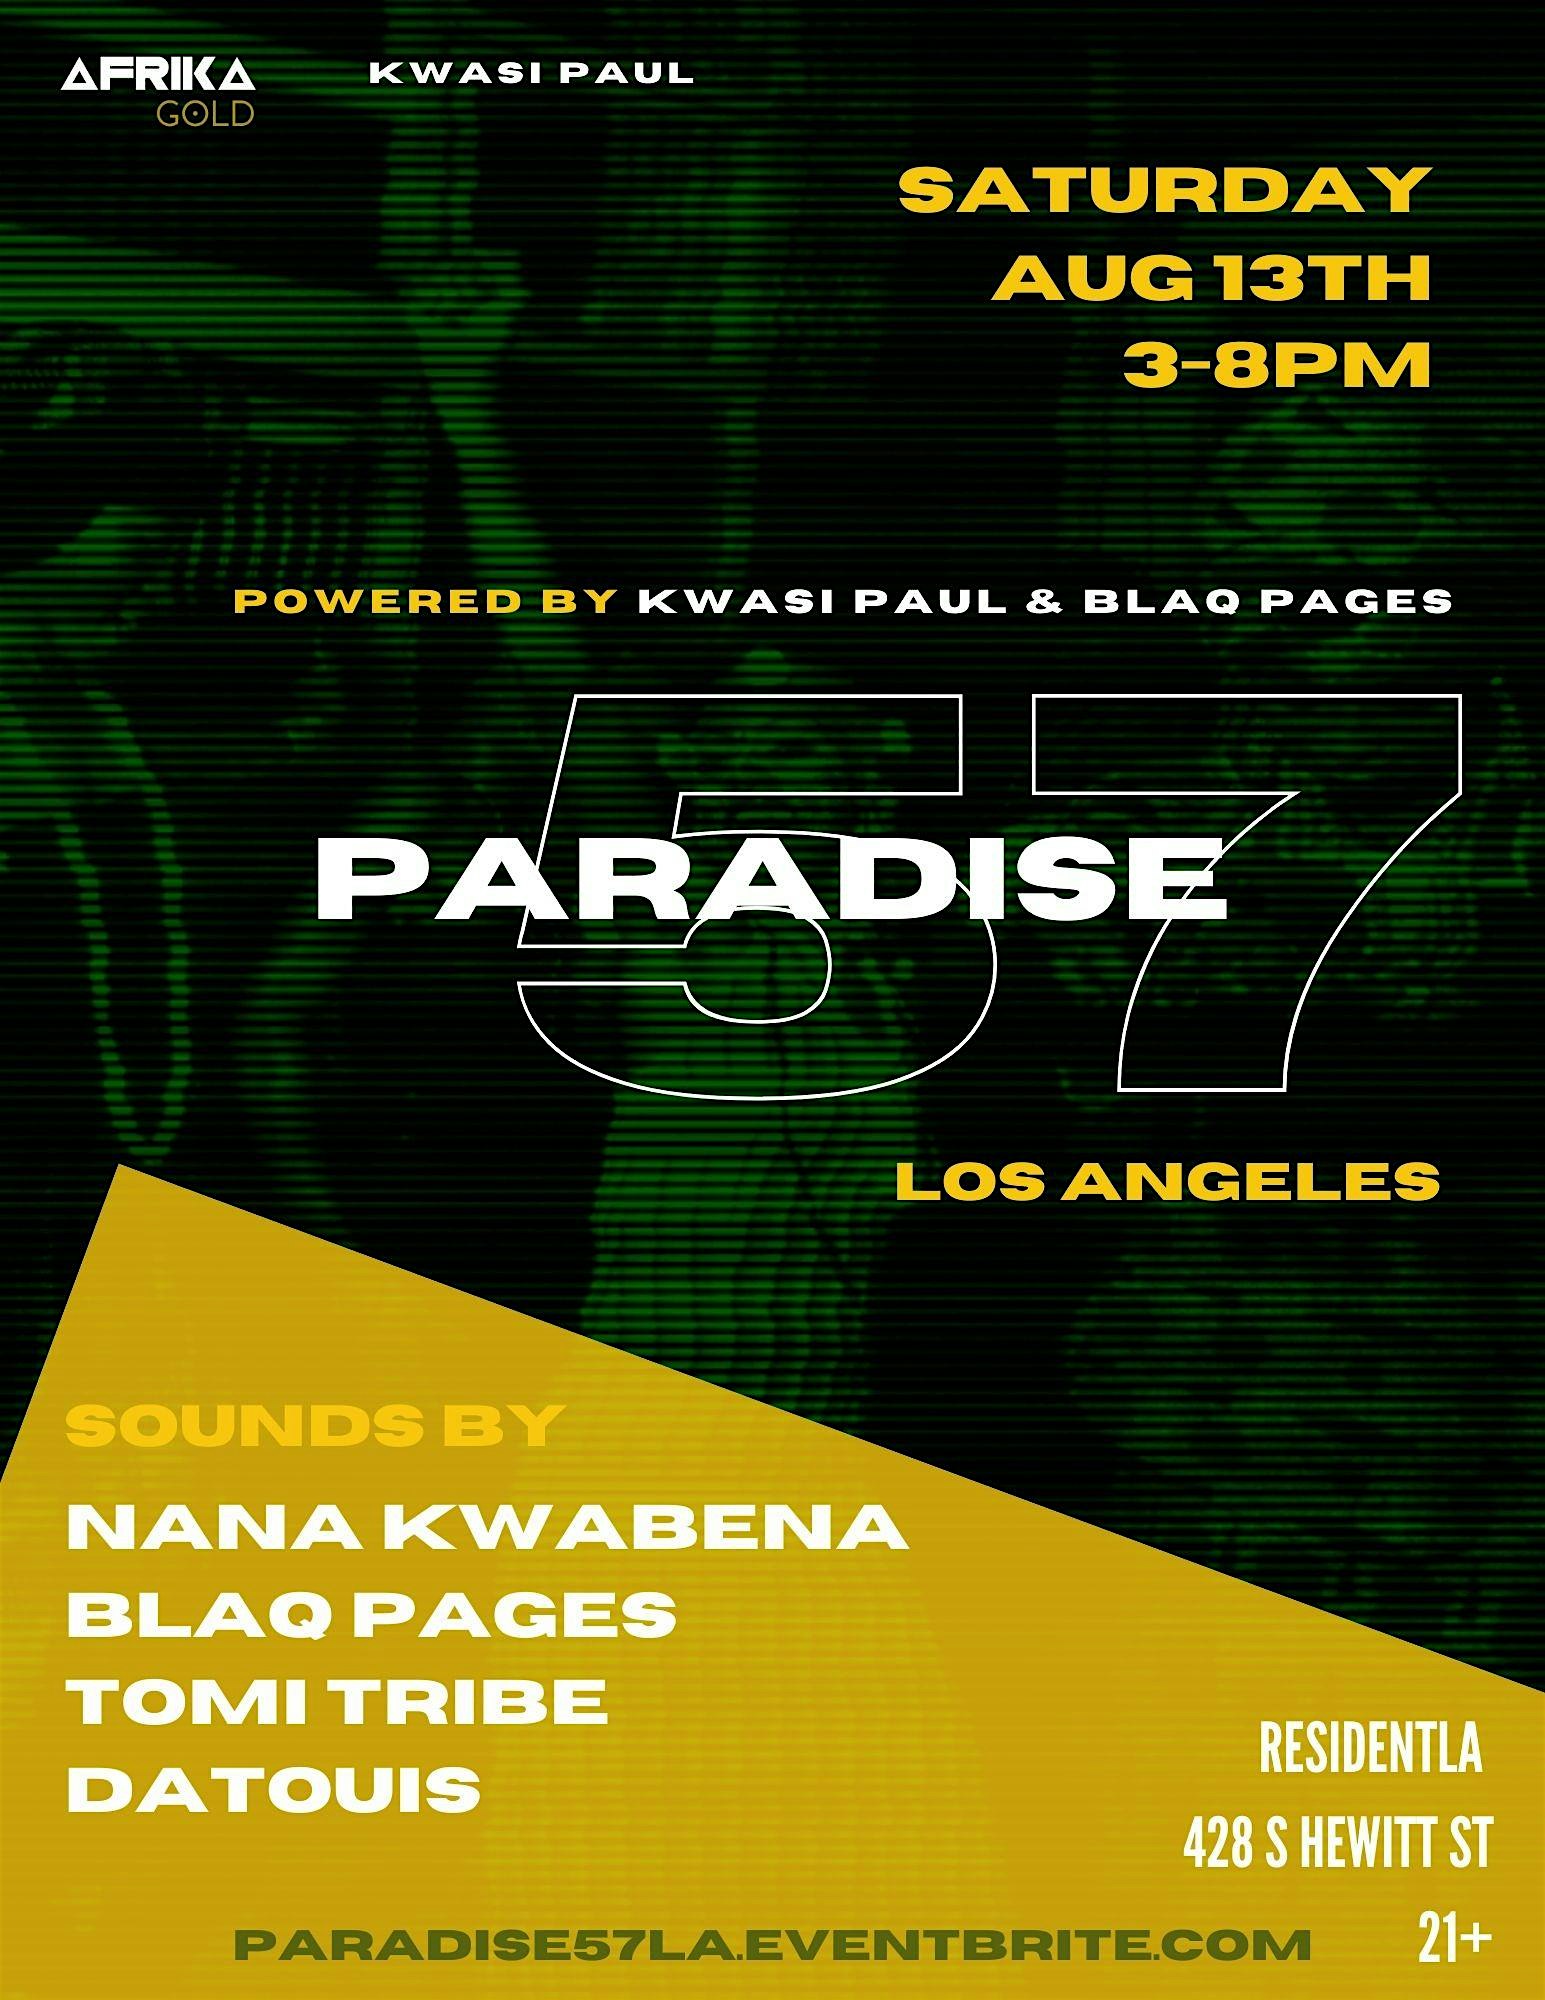 Paradise 57